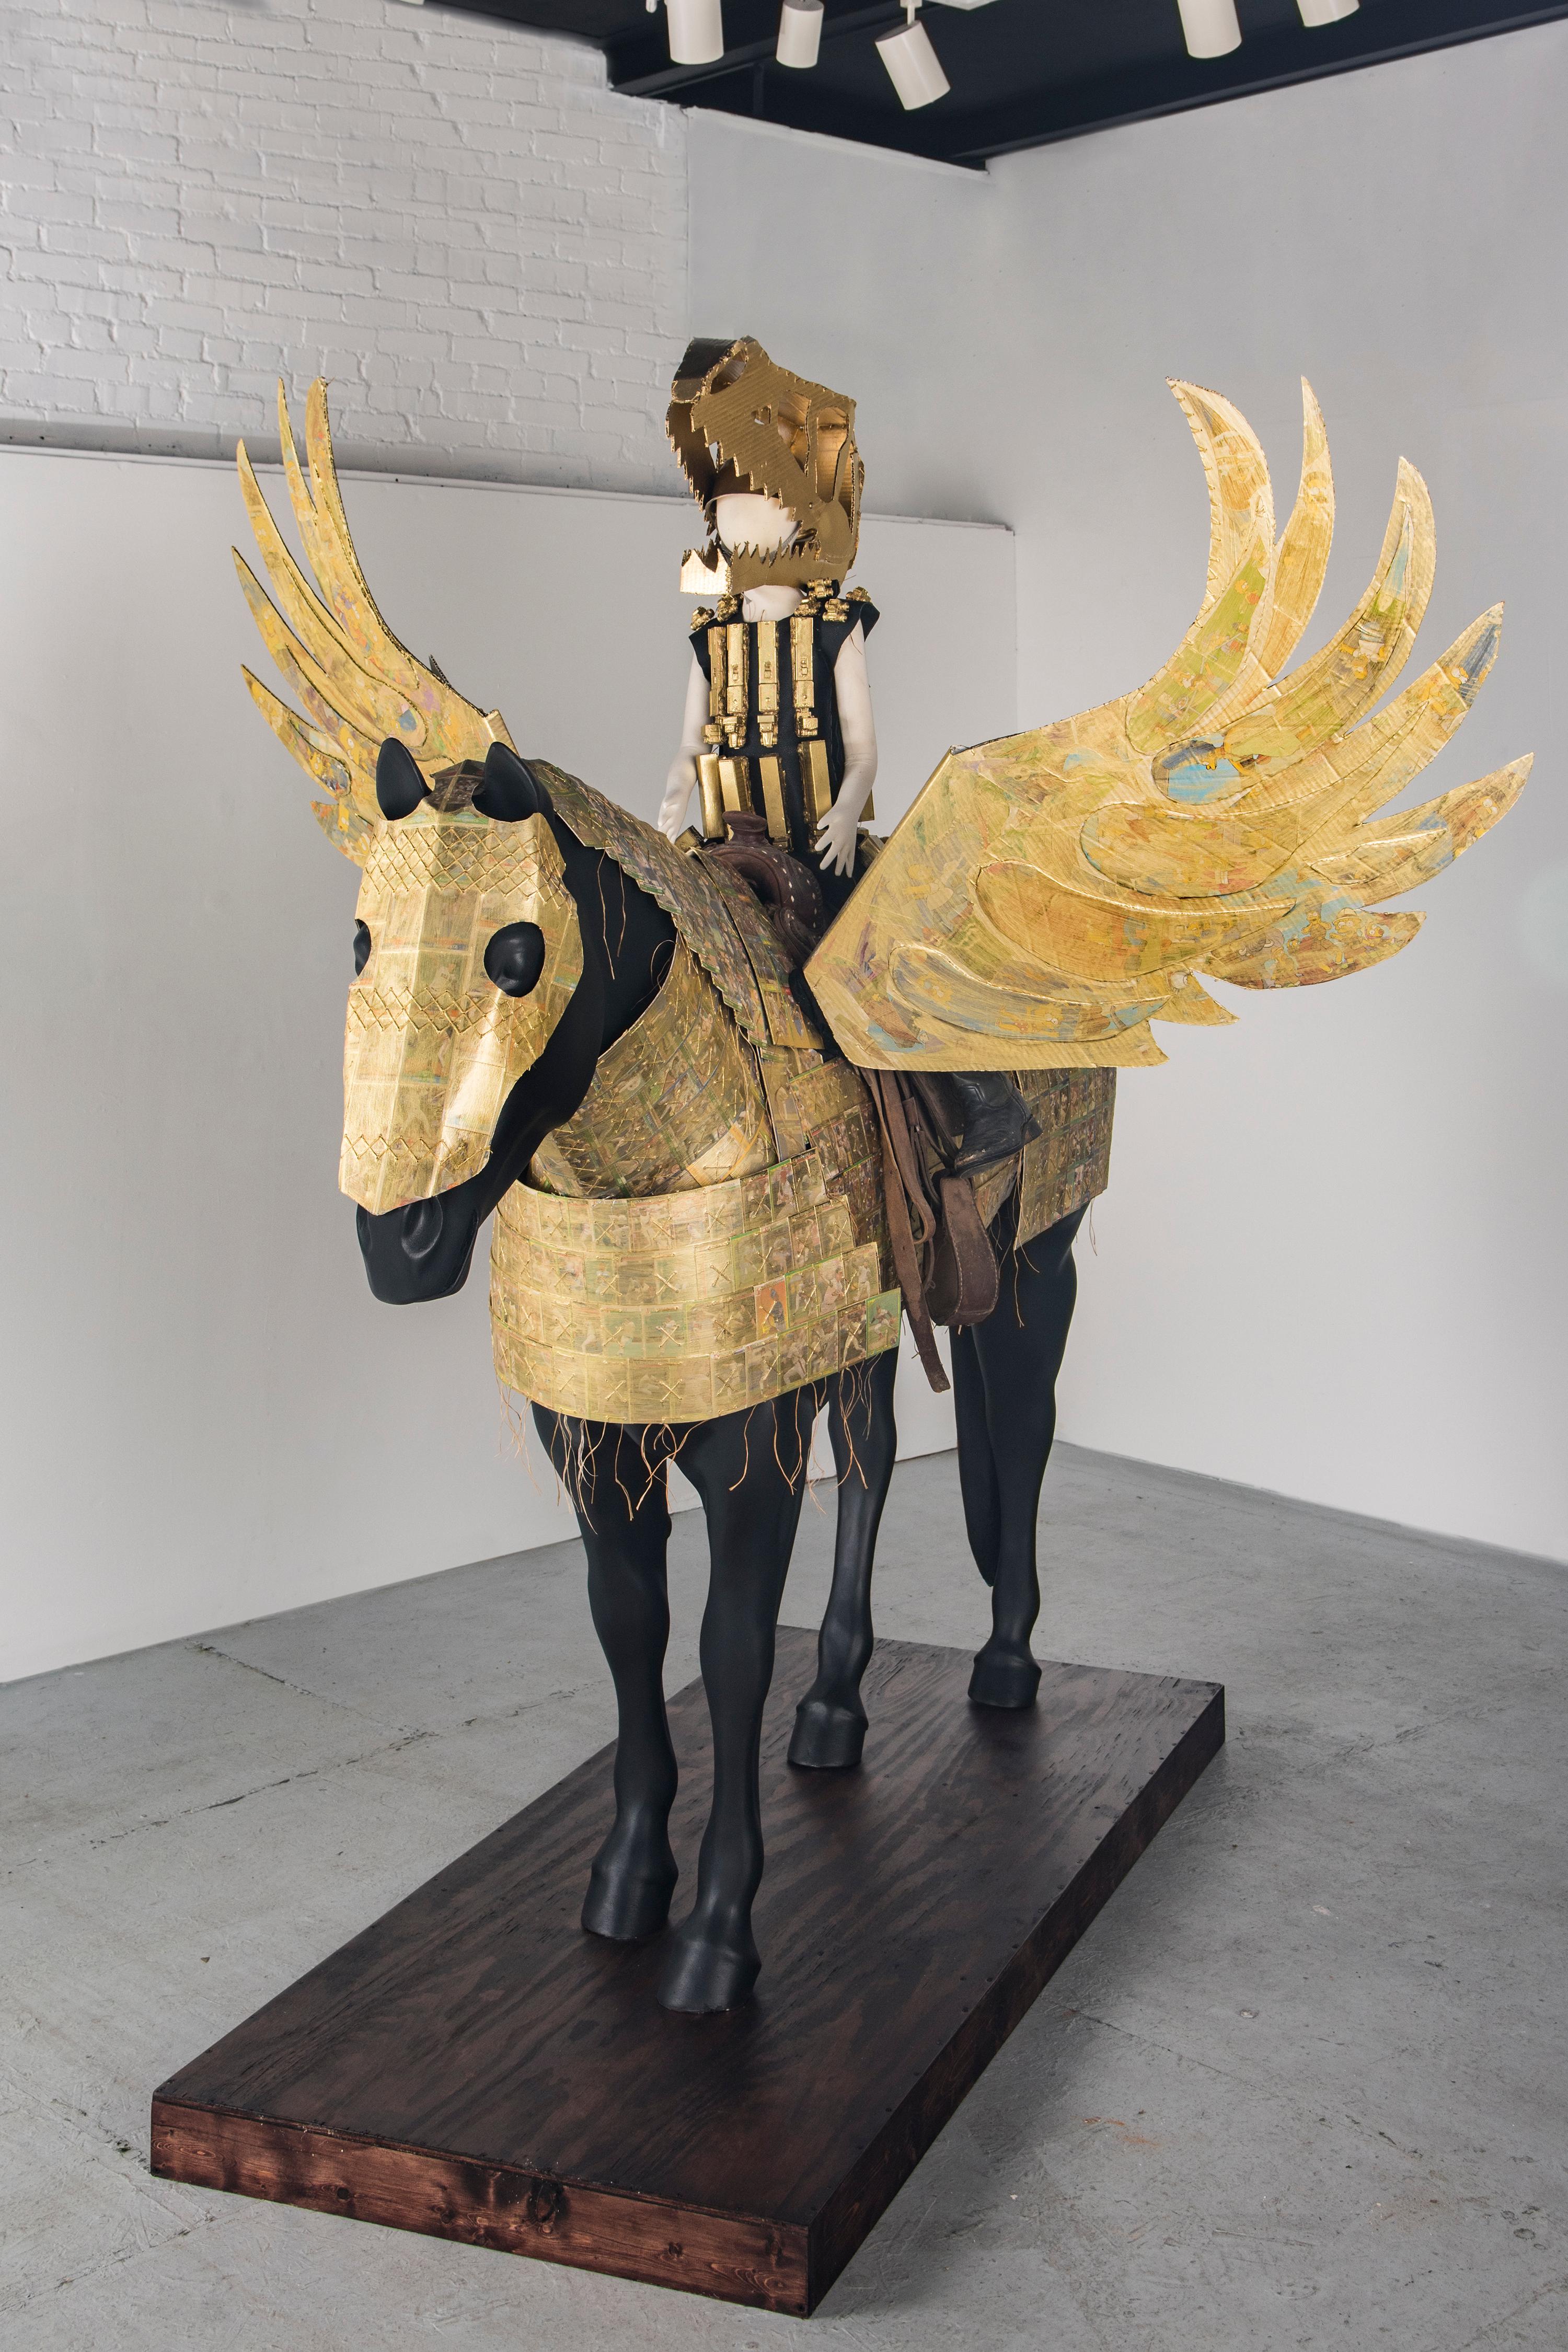 Life Size Sculpture of Human figure on Horse: 'Golden Pegasus Armor'